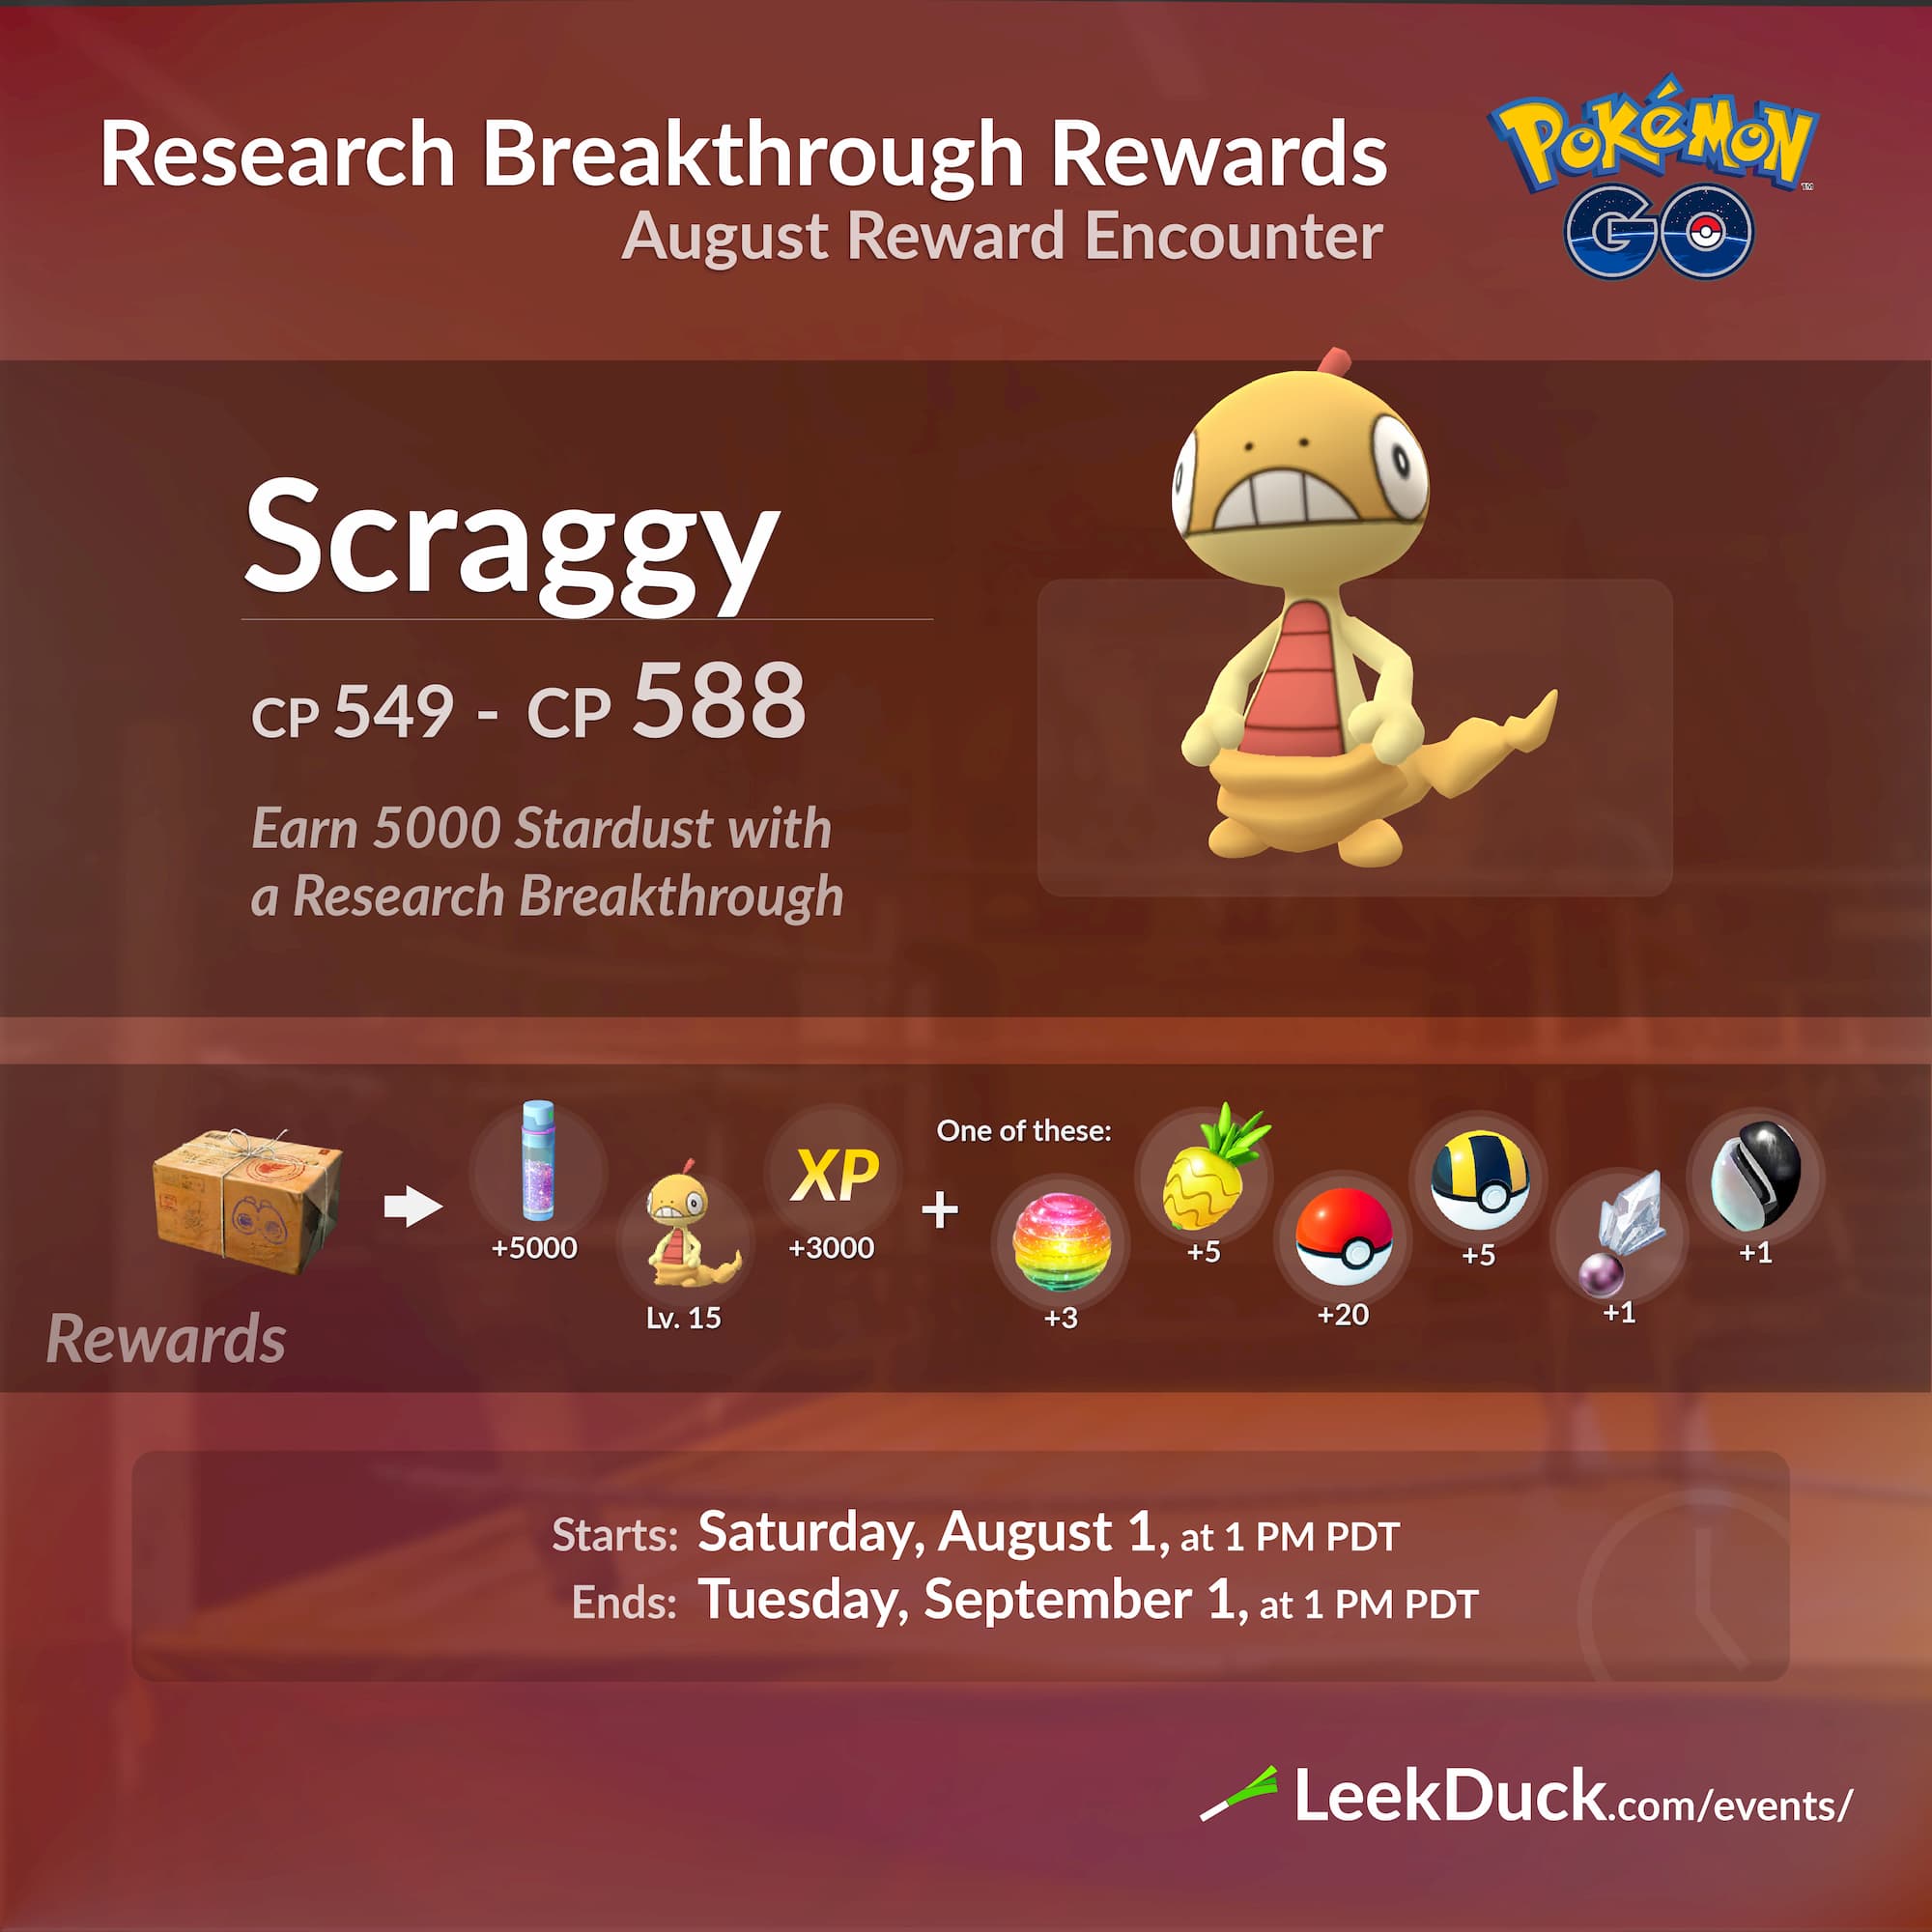 Second Field Research Breakthrough encounter rewards: still